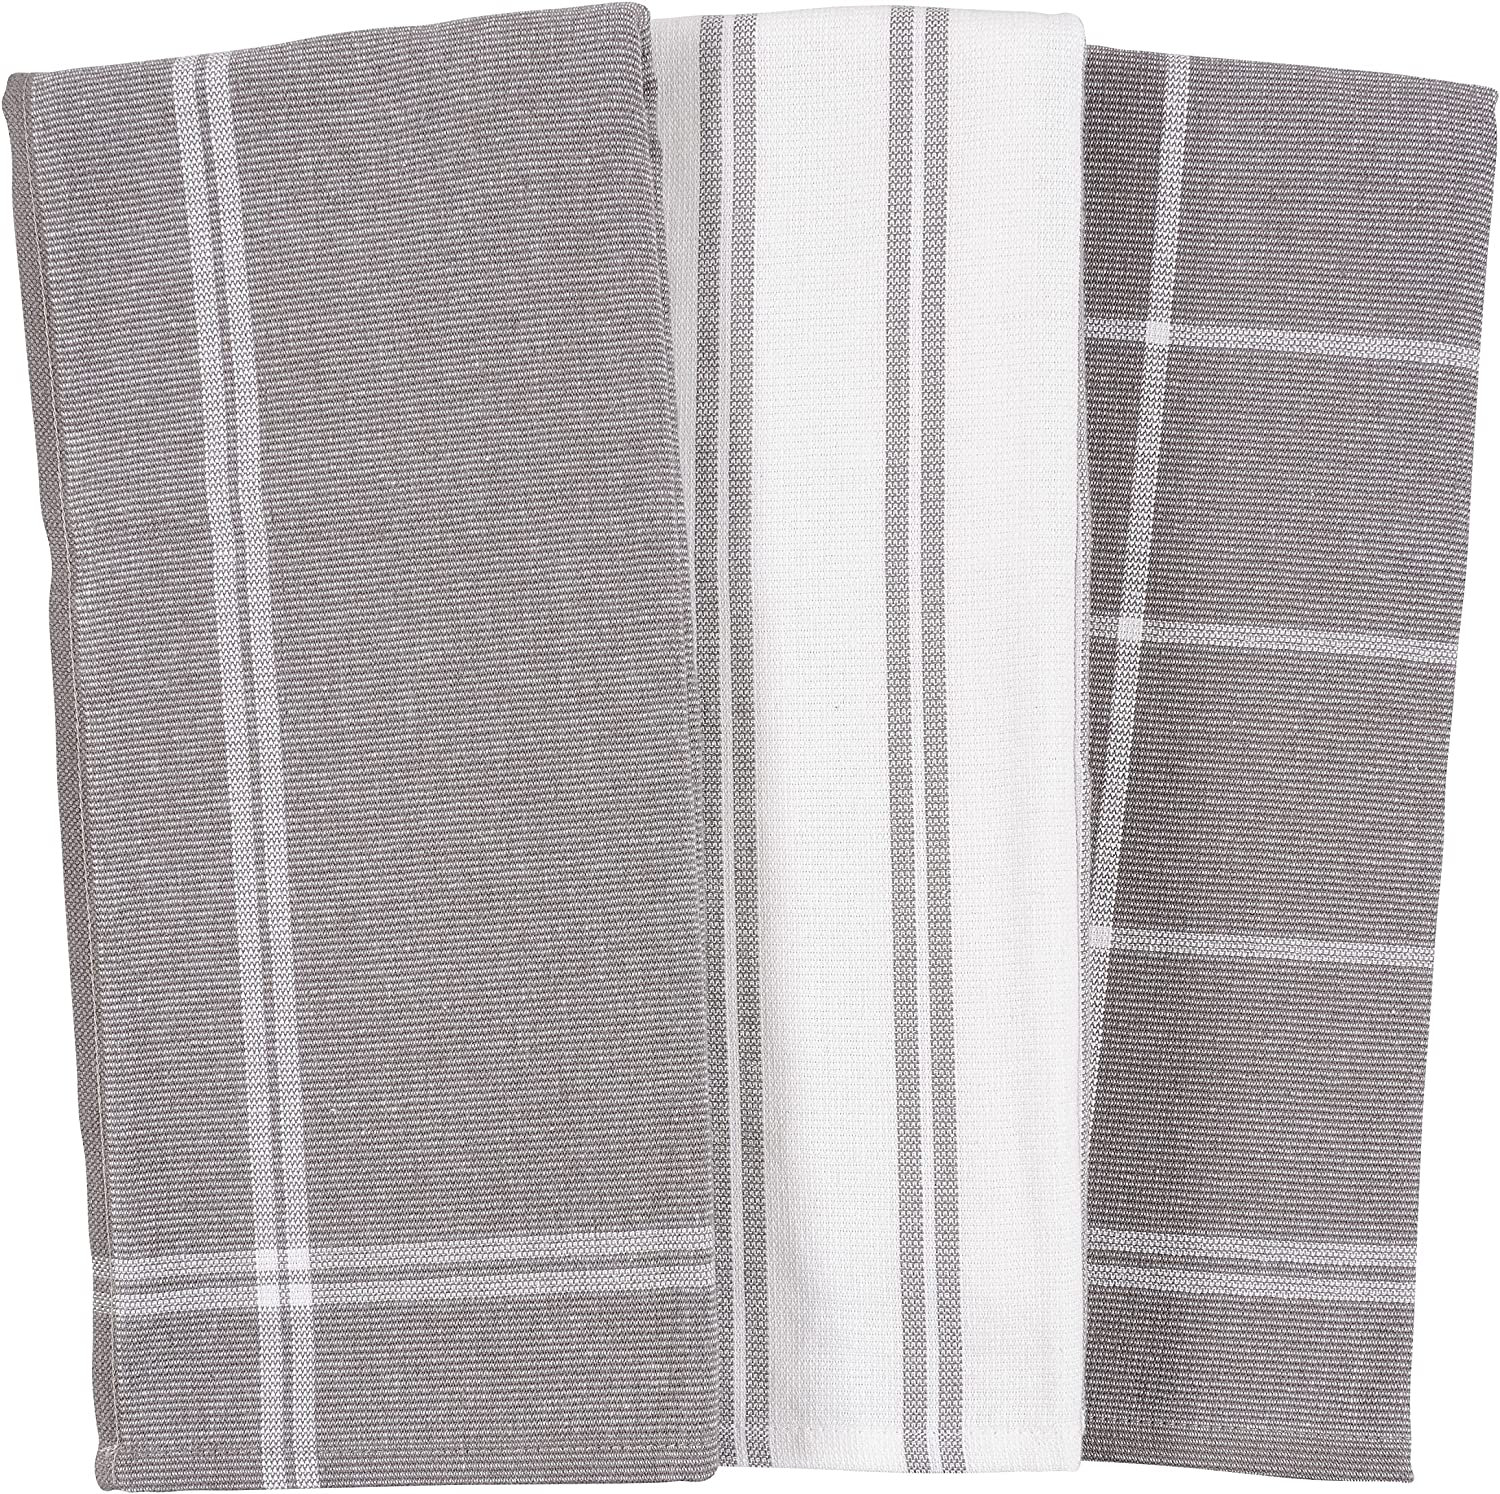 Thyme & Table Cotton Terry Kitchen Towels, Black White, 2-Piece